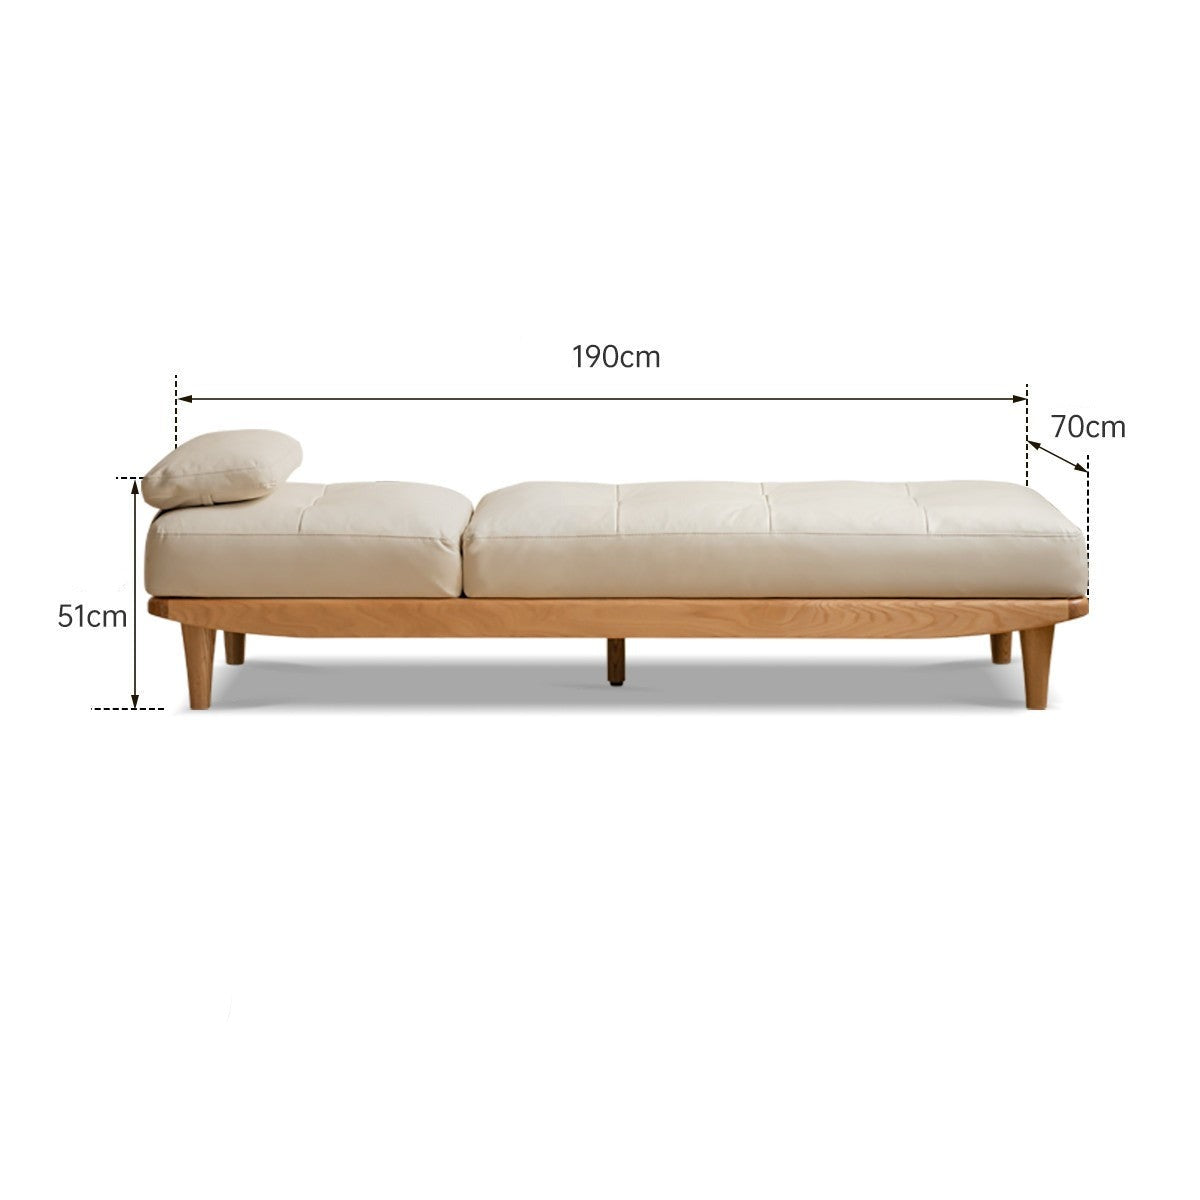 Oak solid wood sofa bed adjustable dual-purpose sofa technological fabric+